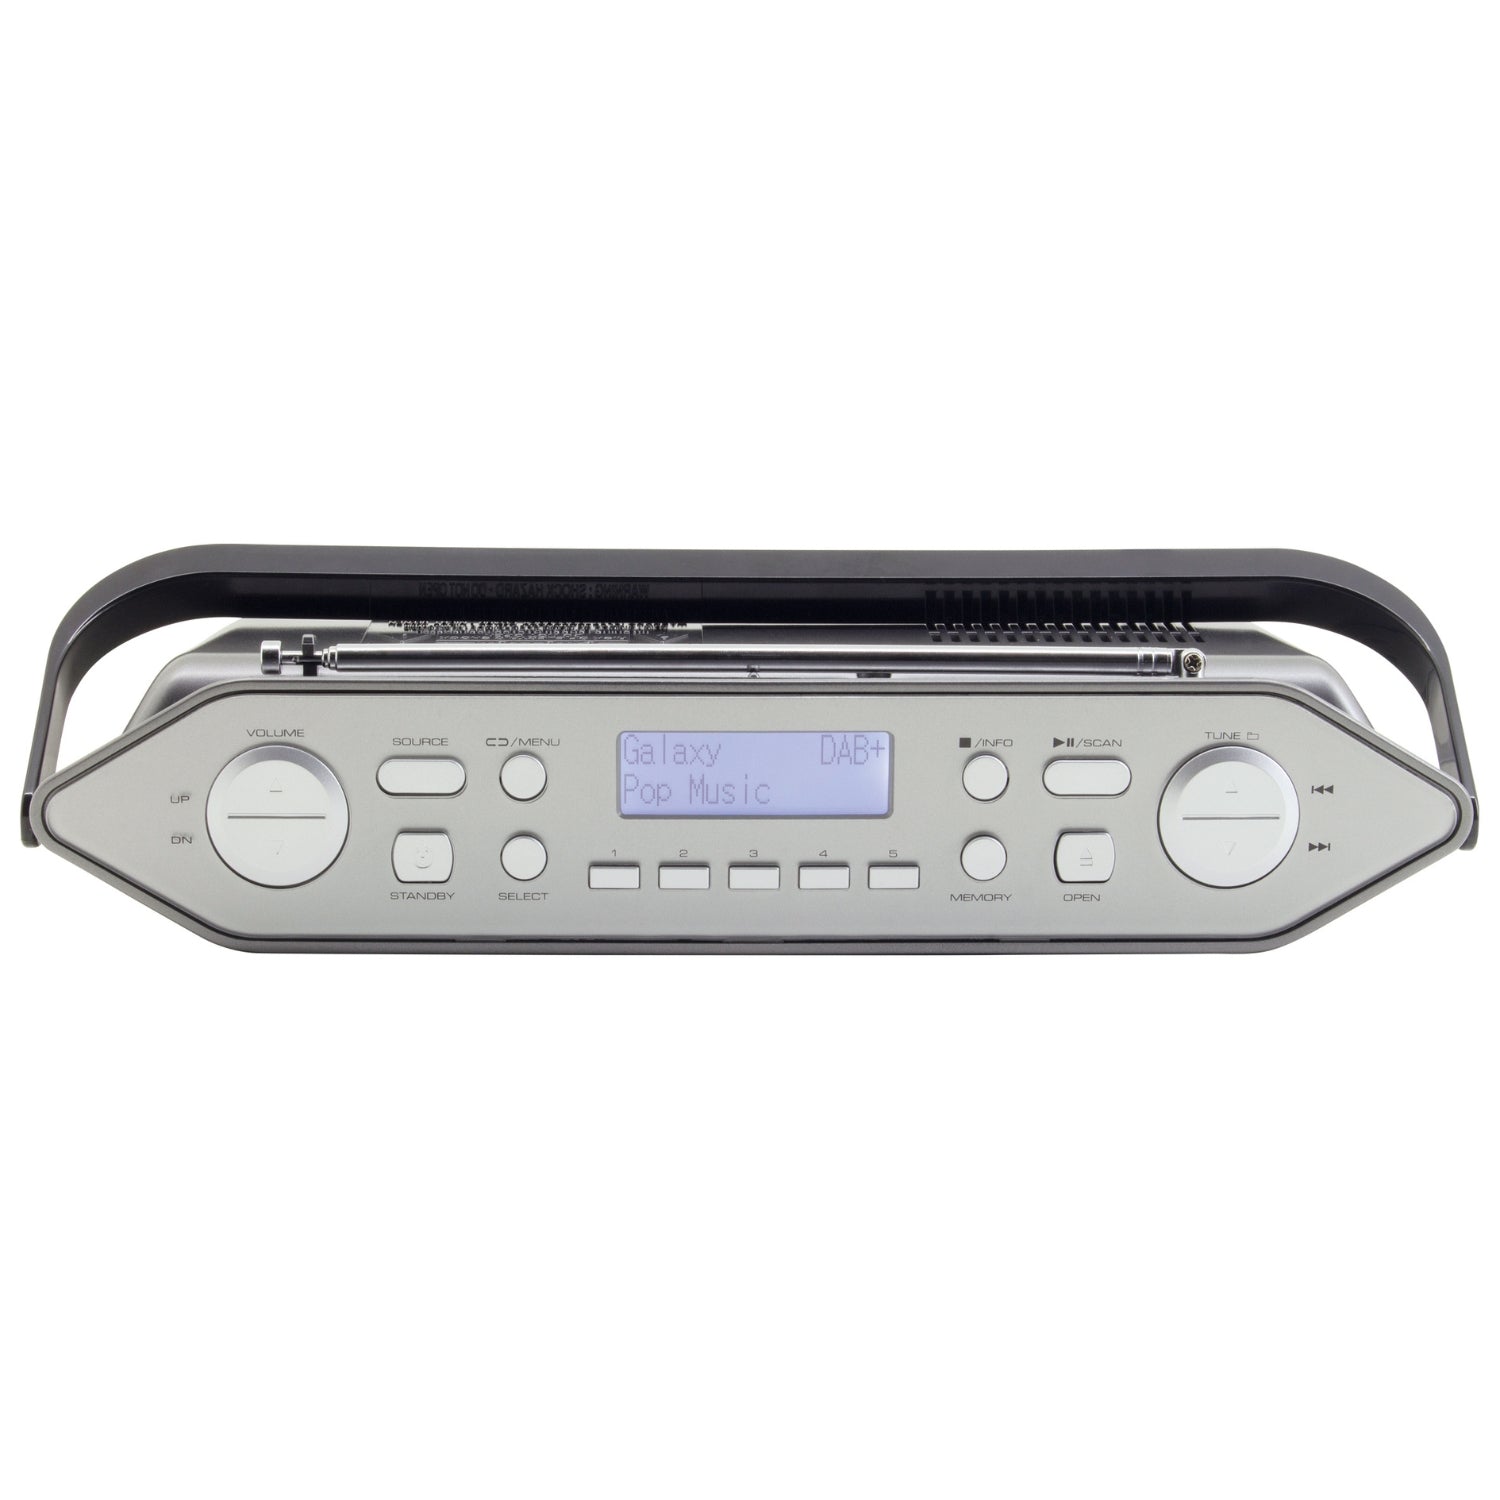 Soundmaster RCD1770AN DAB+ FM digital radio with USB CD MP3 player